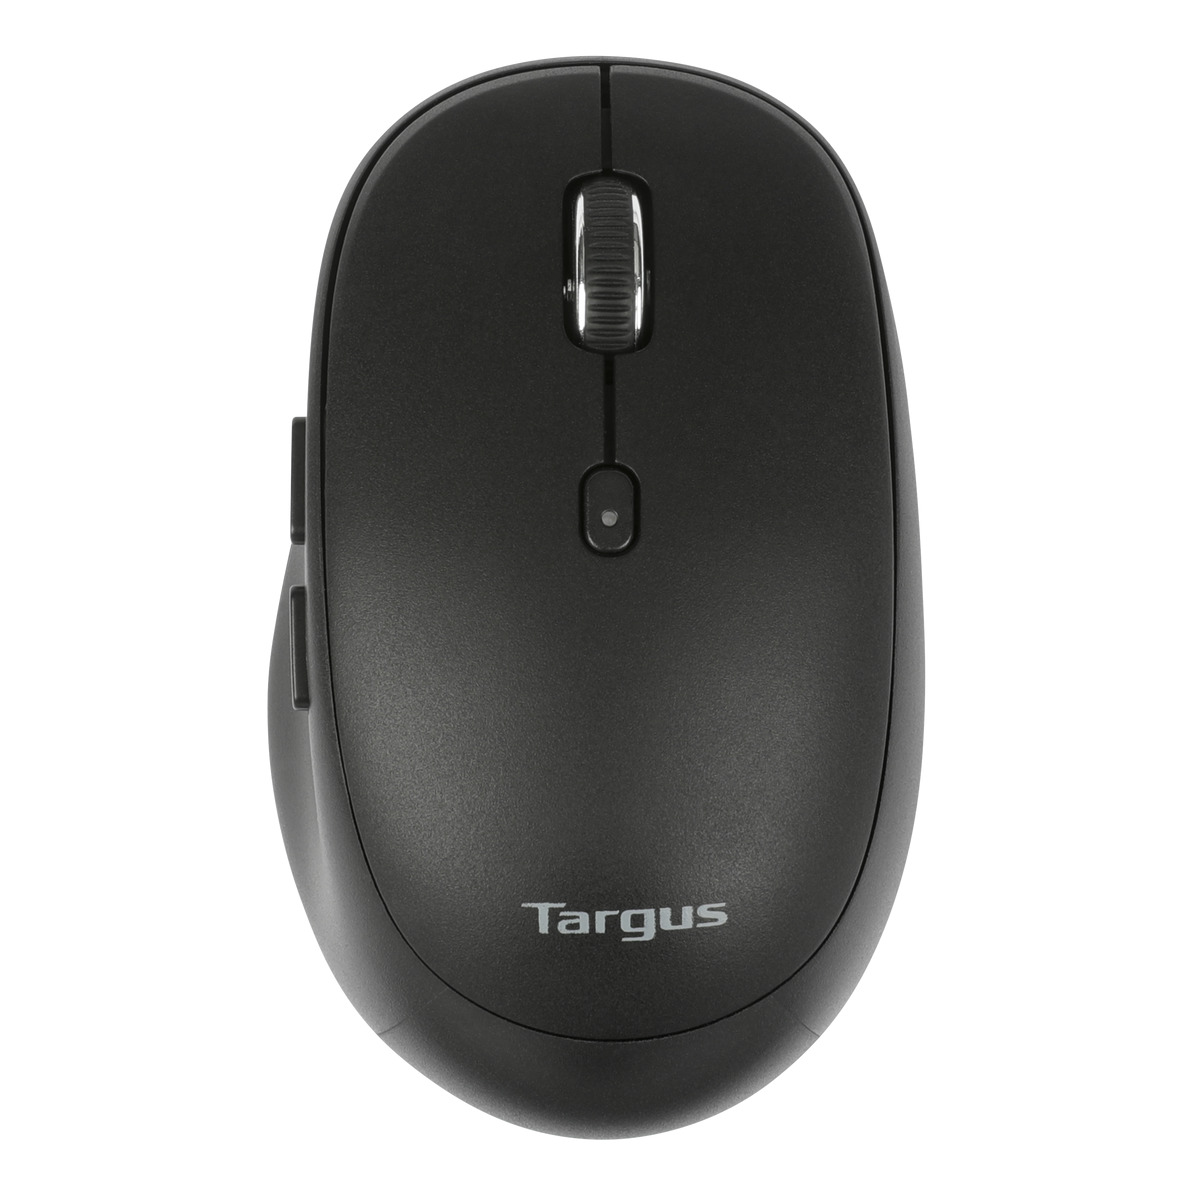  - Mouse midsize  multi dispositivo antmicrobial Targus 1